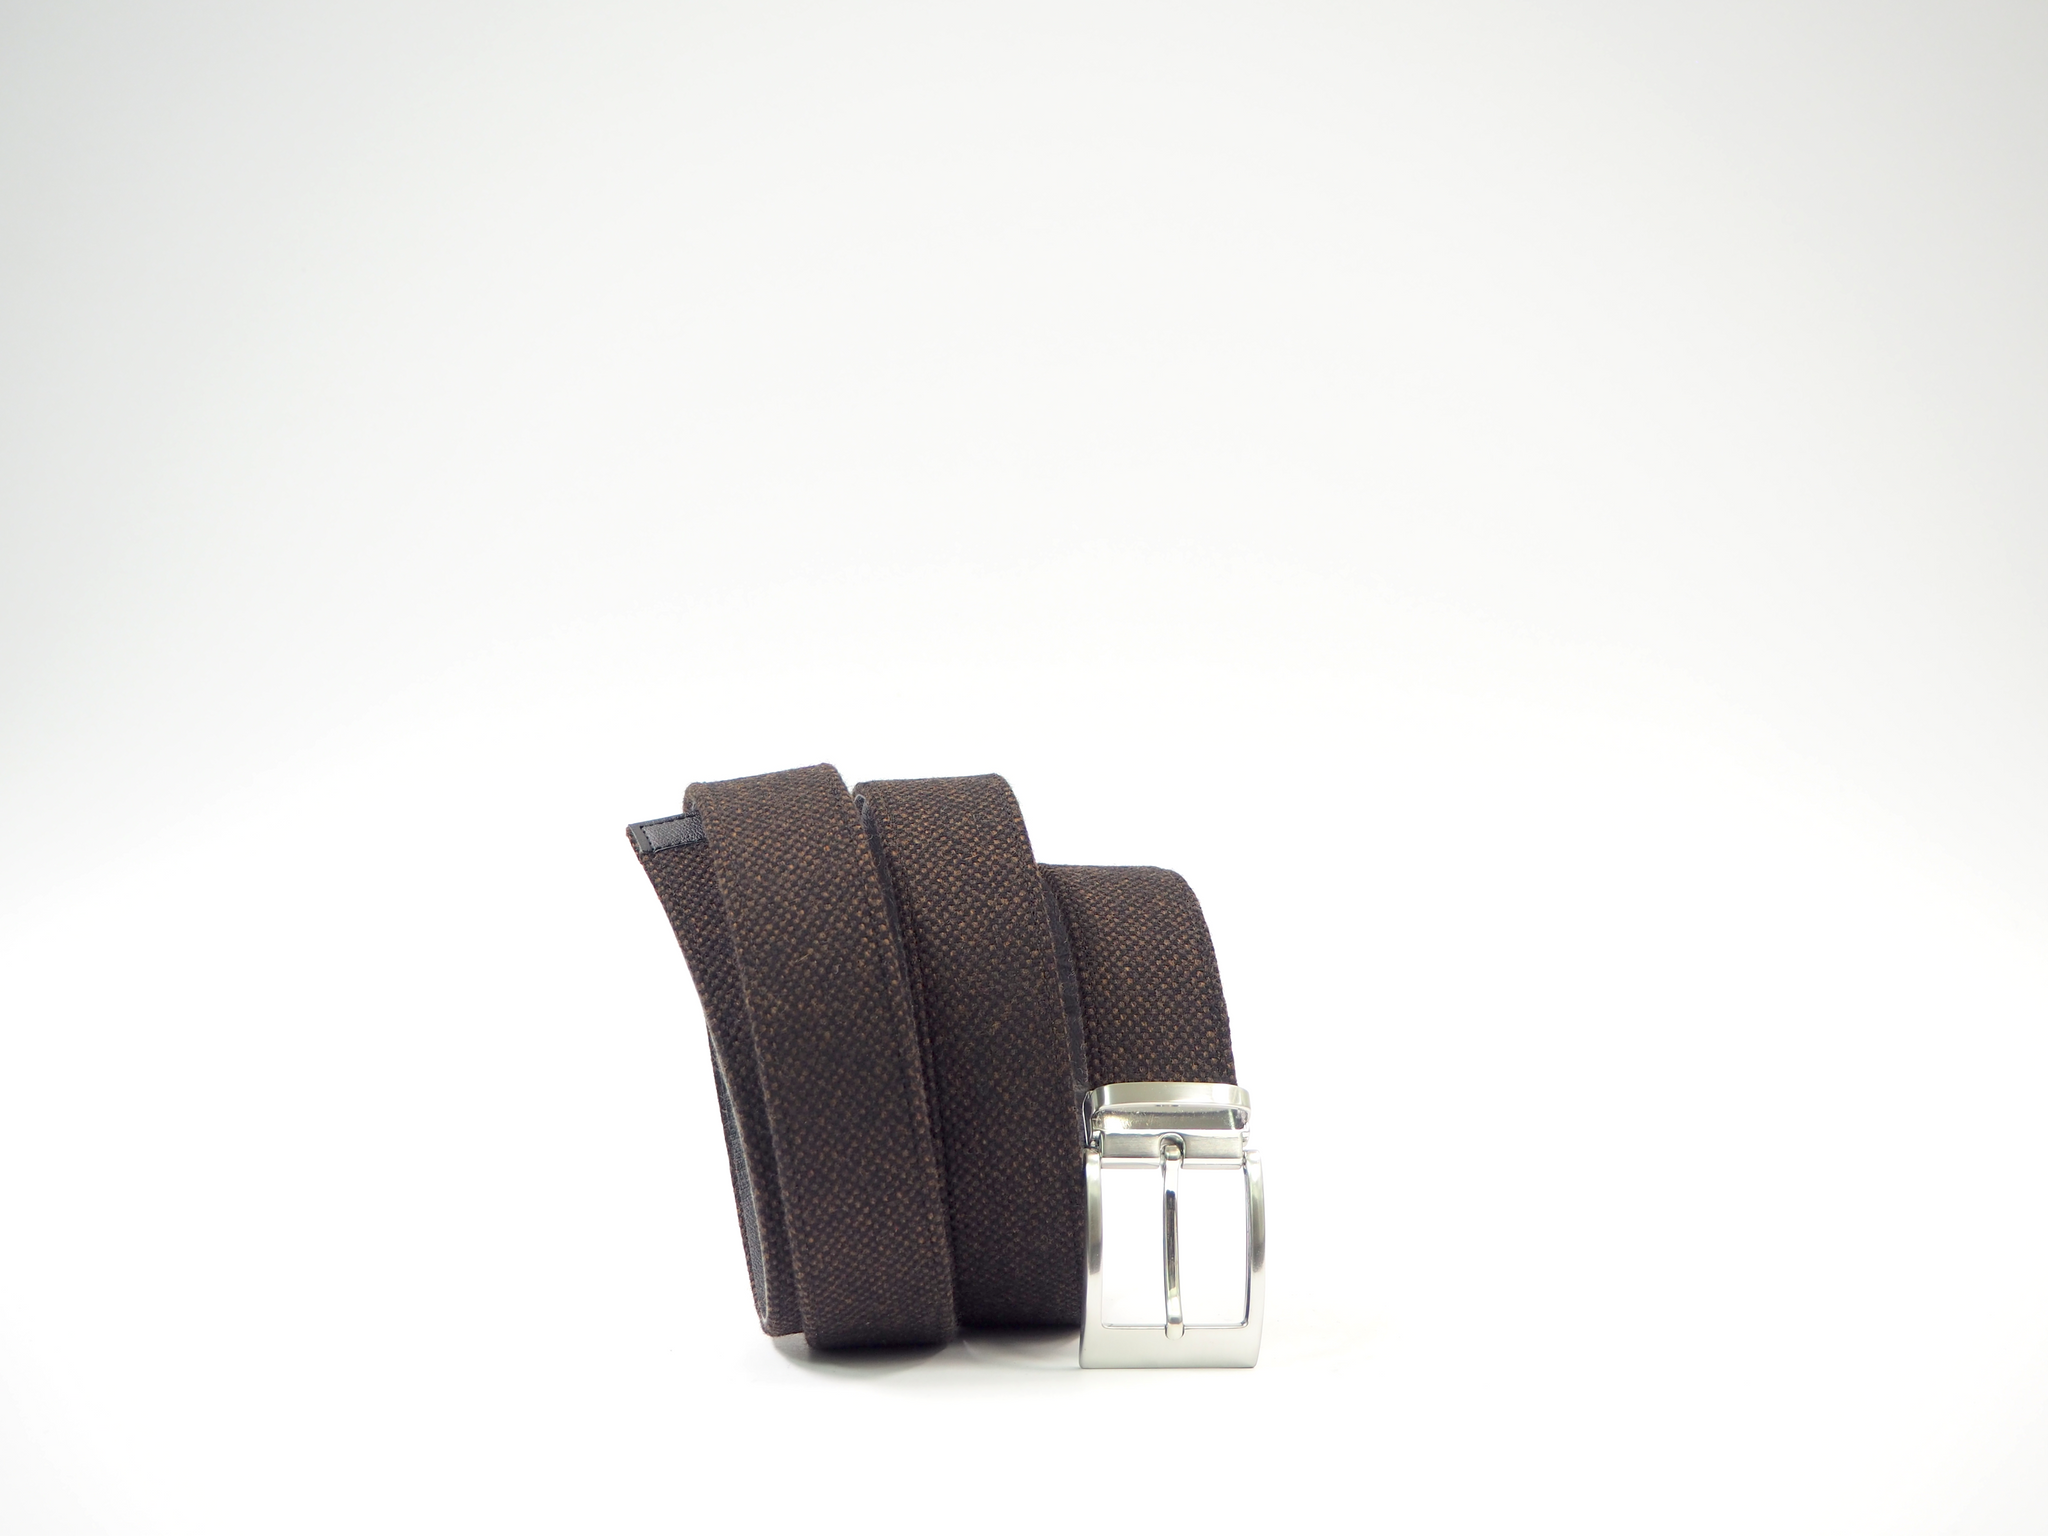 Size 45 - Brown & Black Oxford + Belt